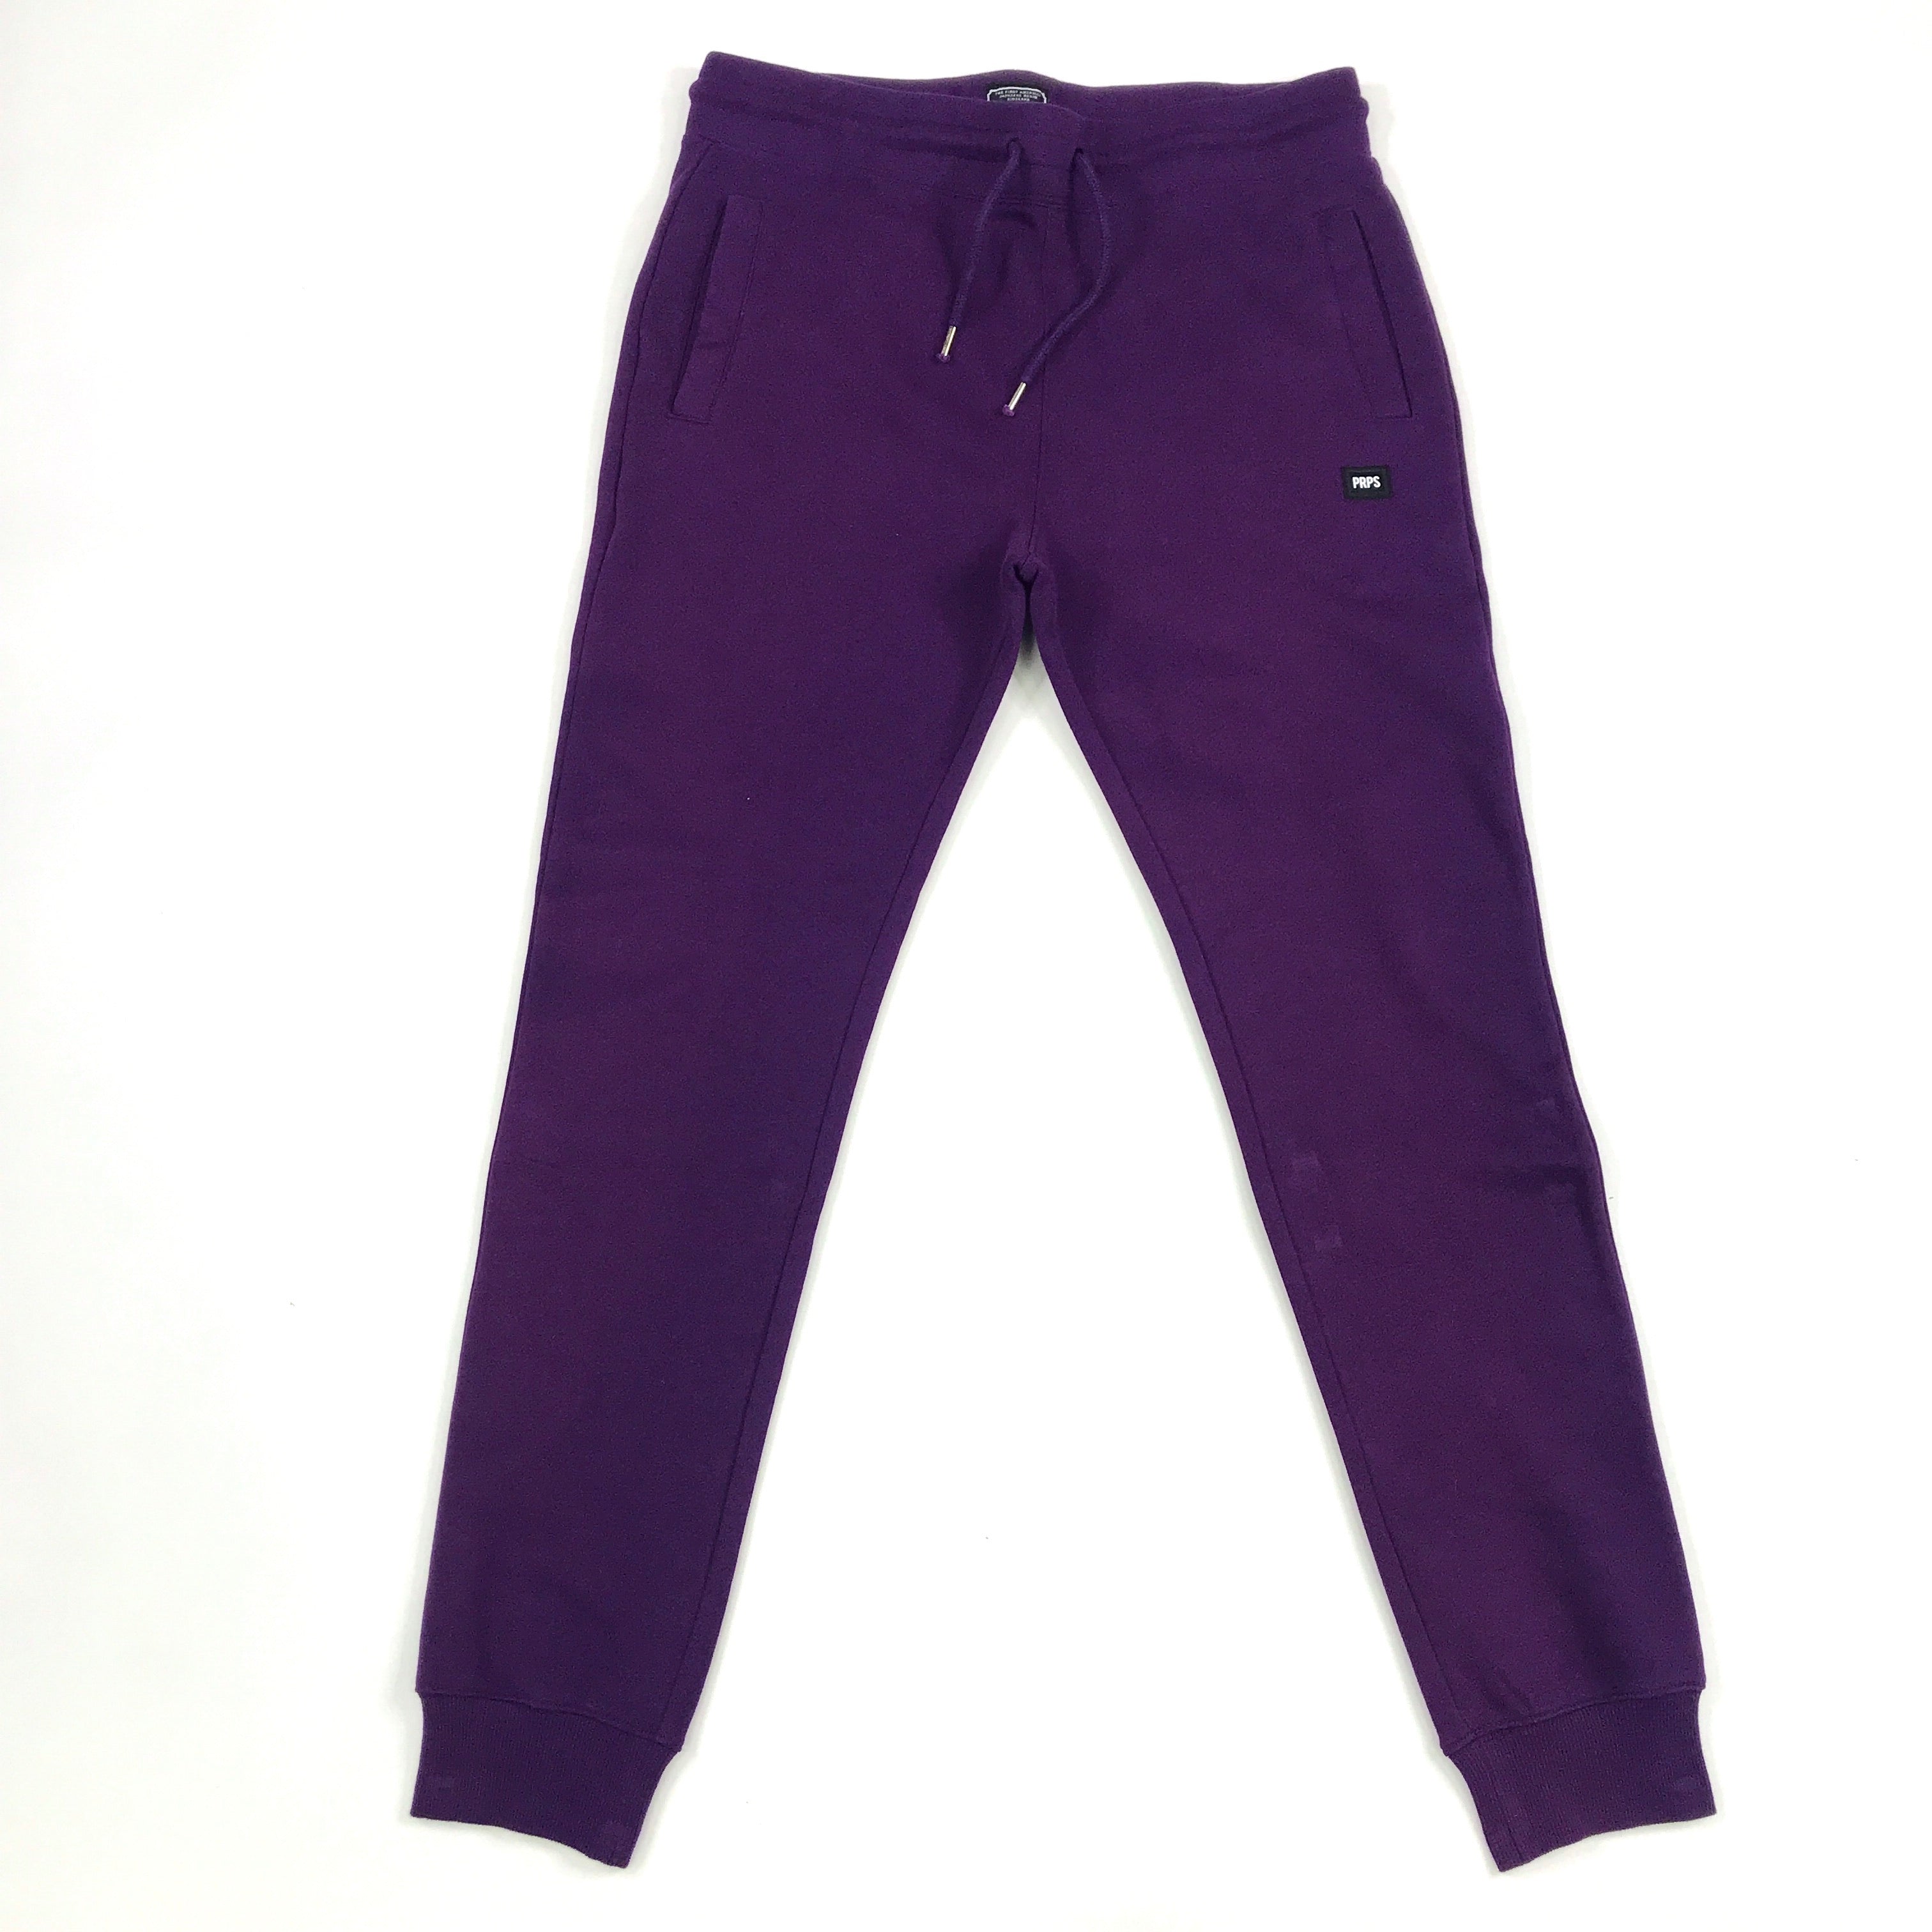 PRPS solid crewneck jogging suit in purple